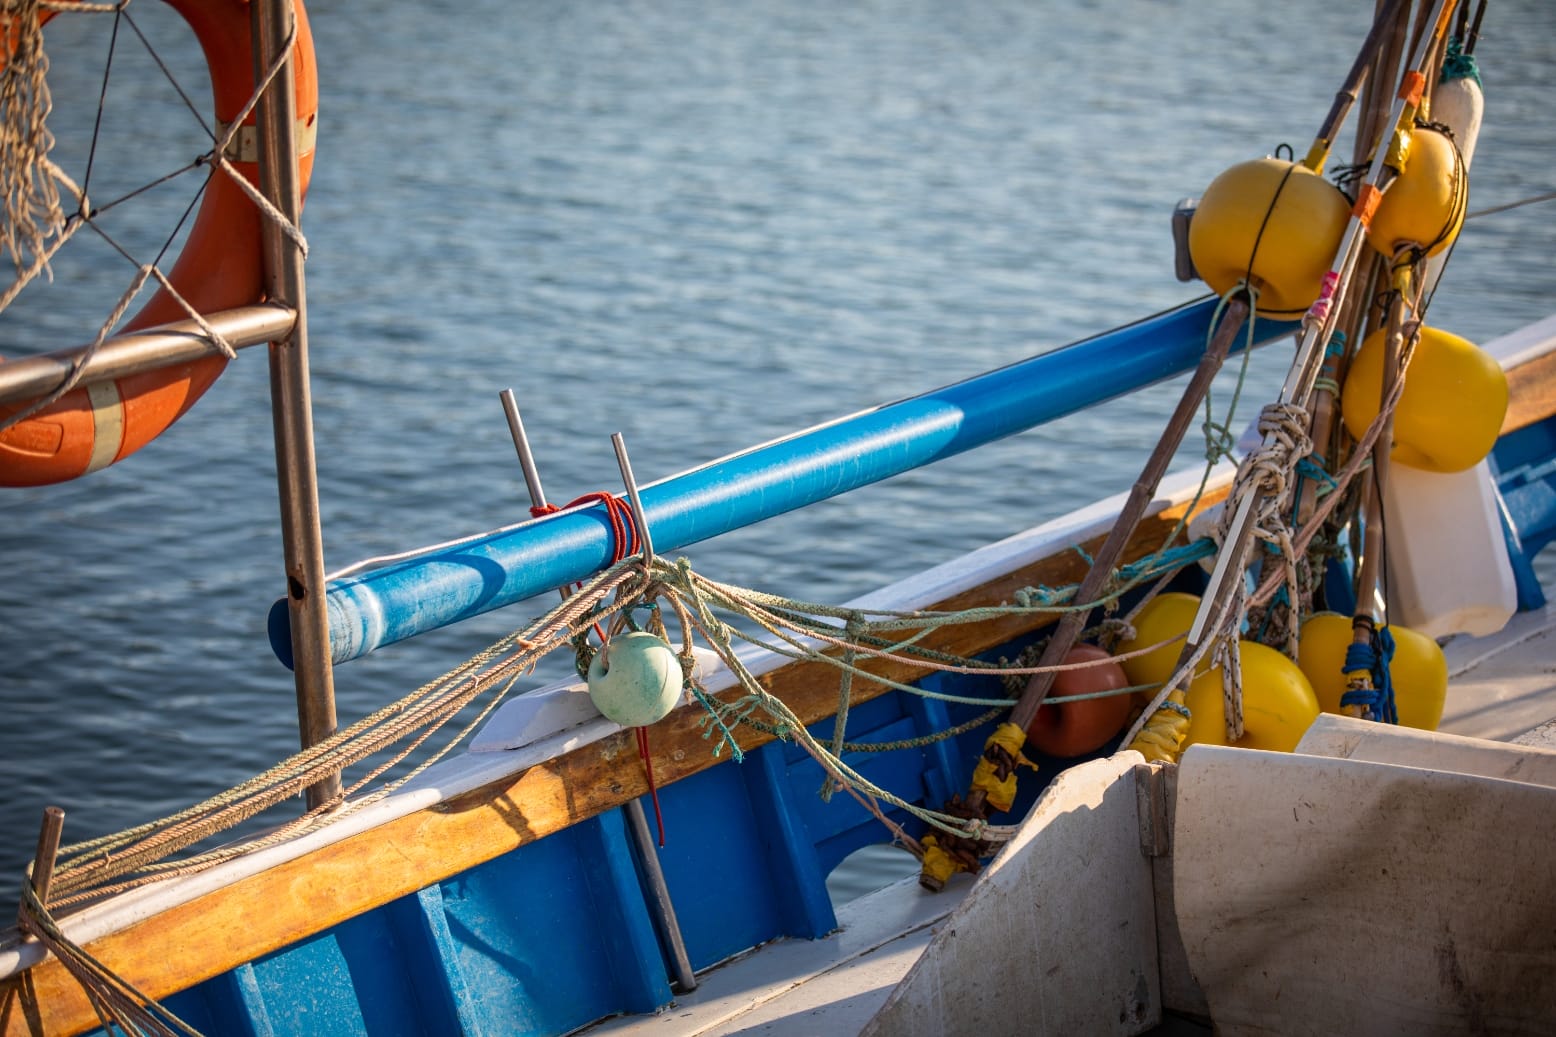 Boats at dock Golden Islands - hotel porquerolles medes